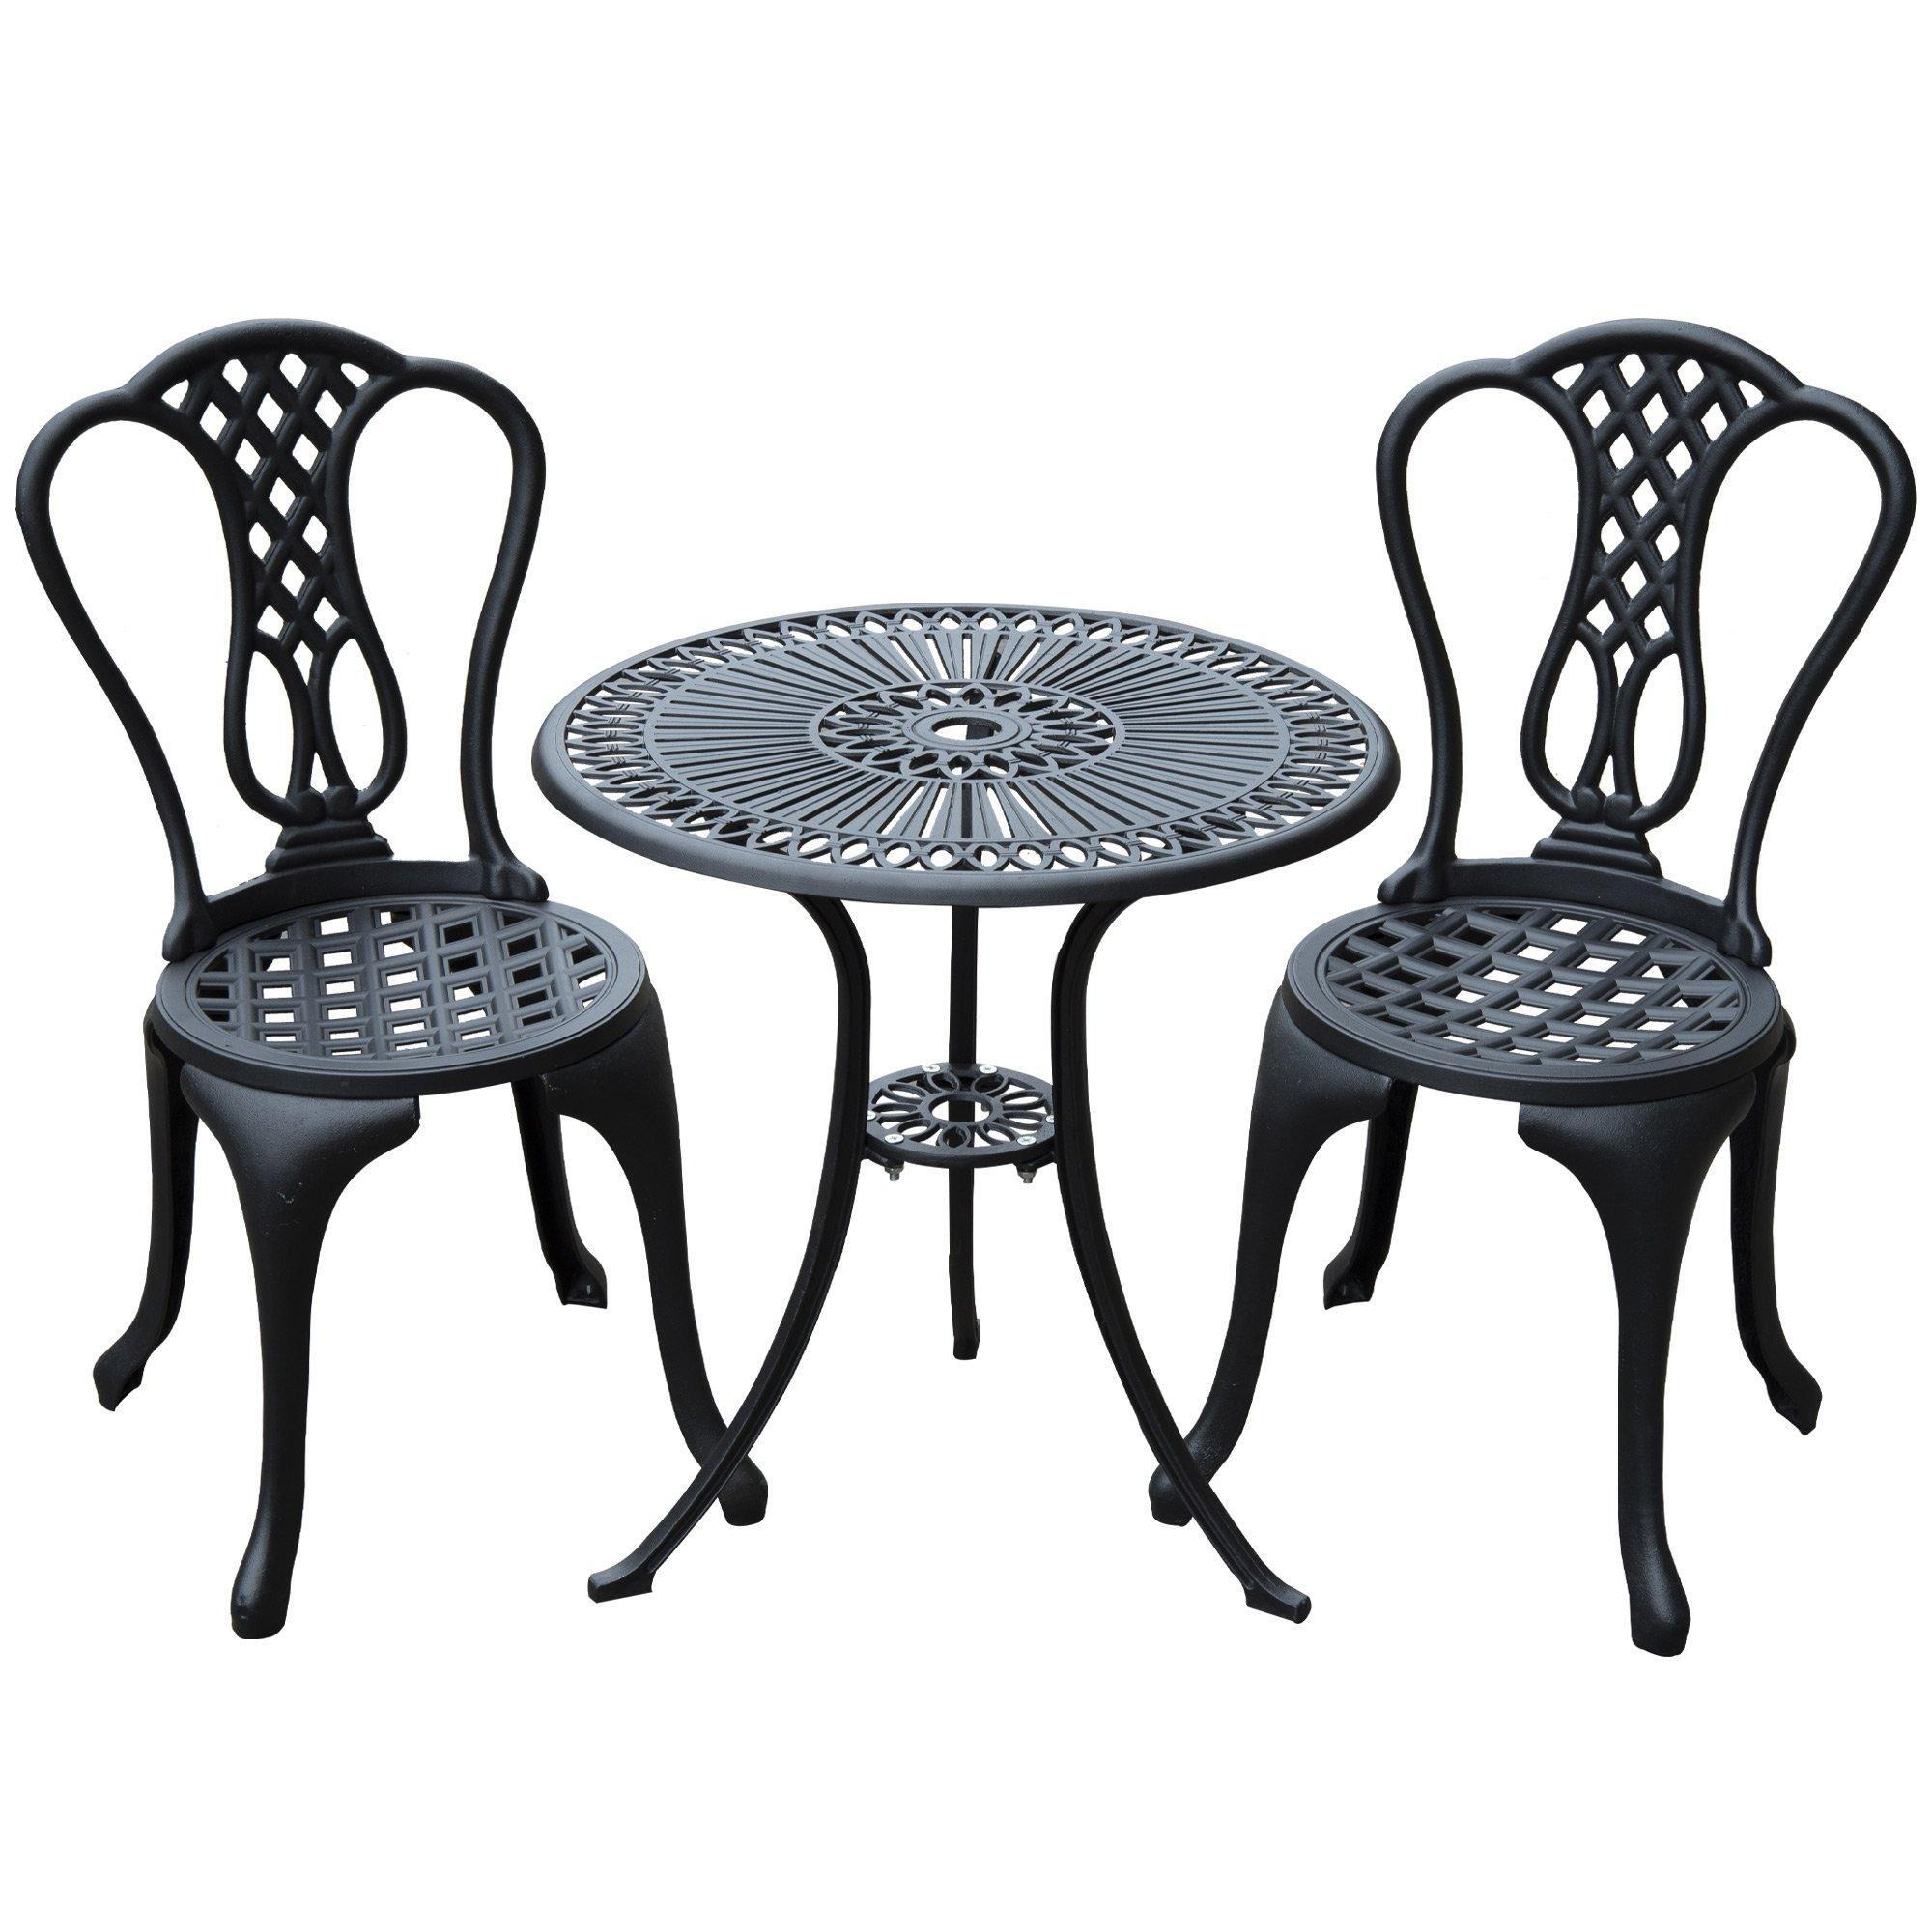 Garden Bistro Set Outdoor Table Chairs Aluminium Patio Lawn Furniture - image 1